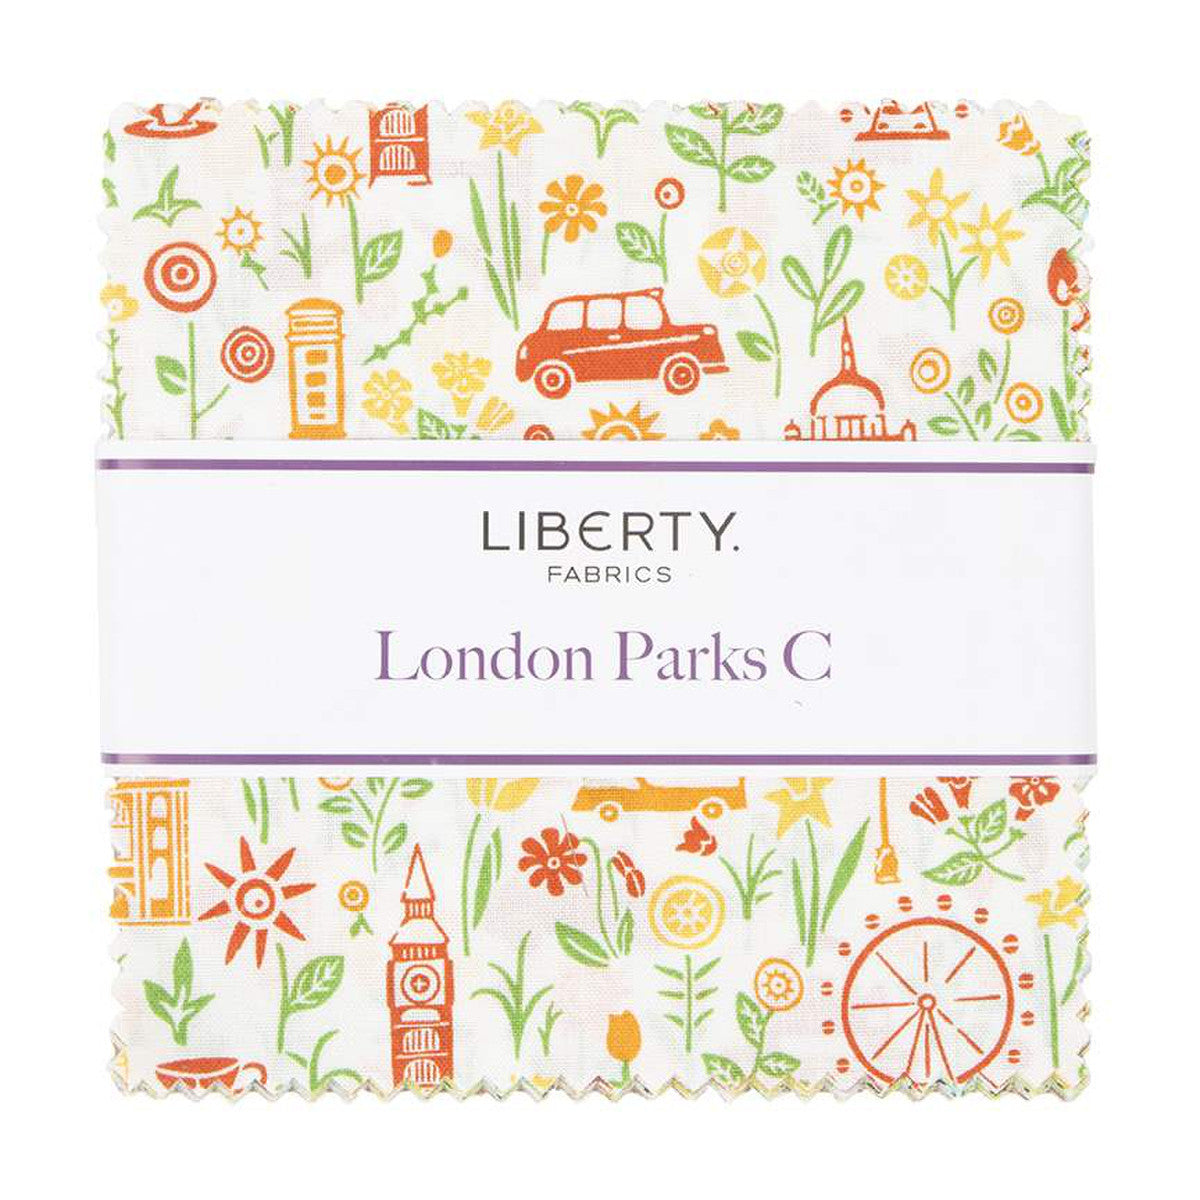 London Parks C by Liberty Fabrics